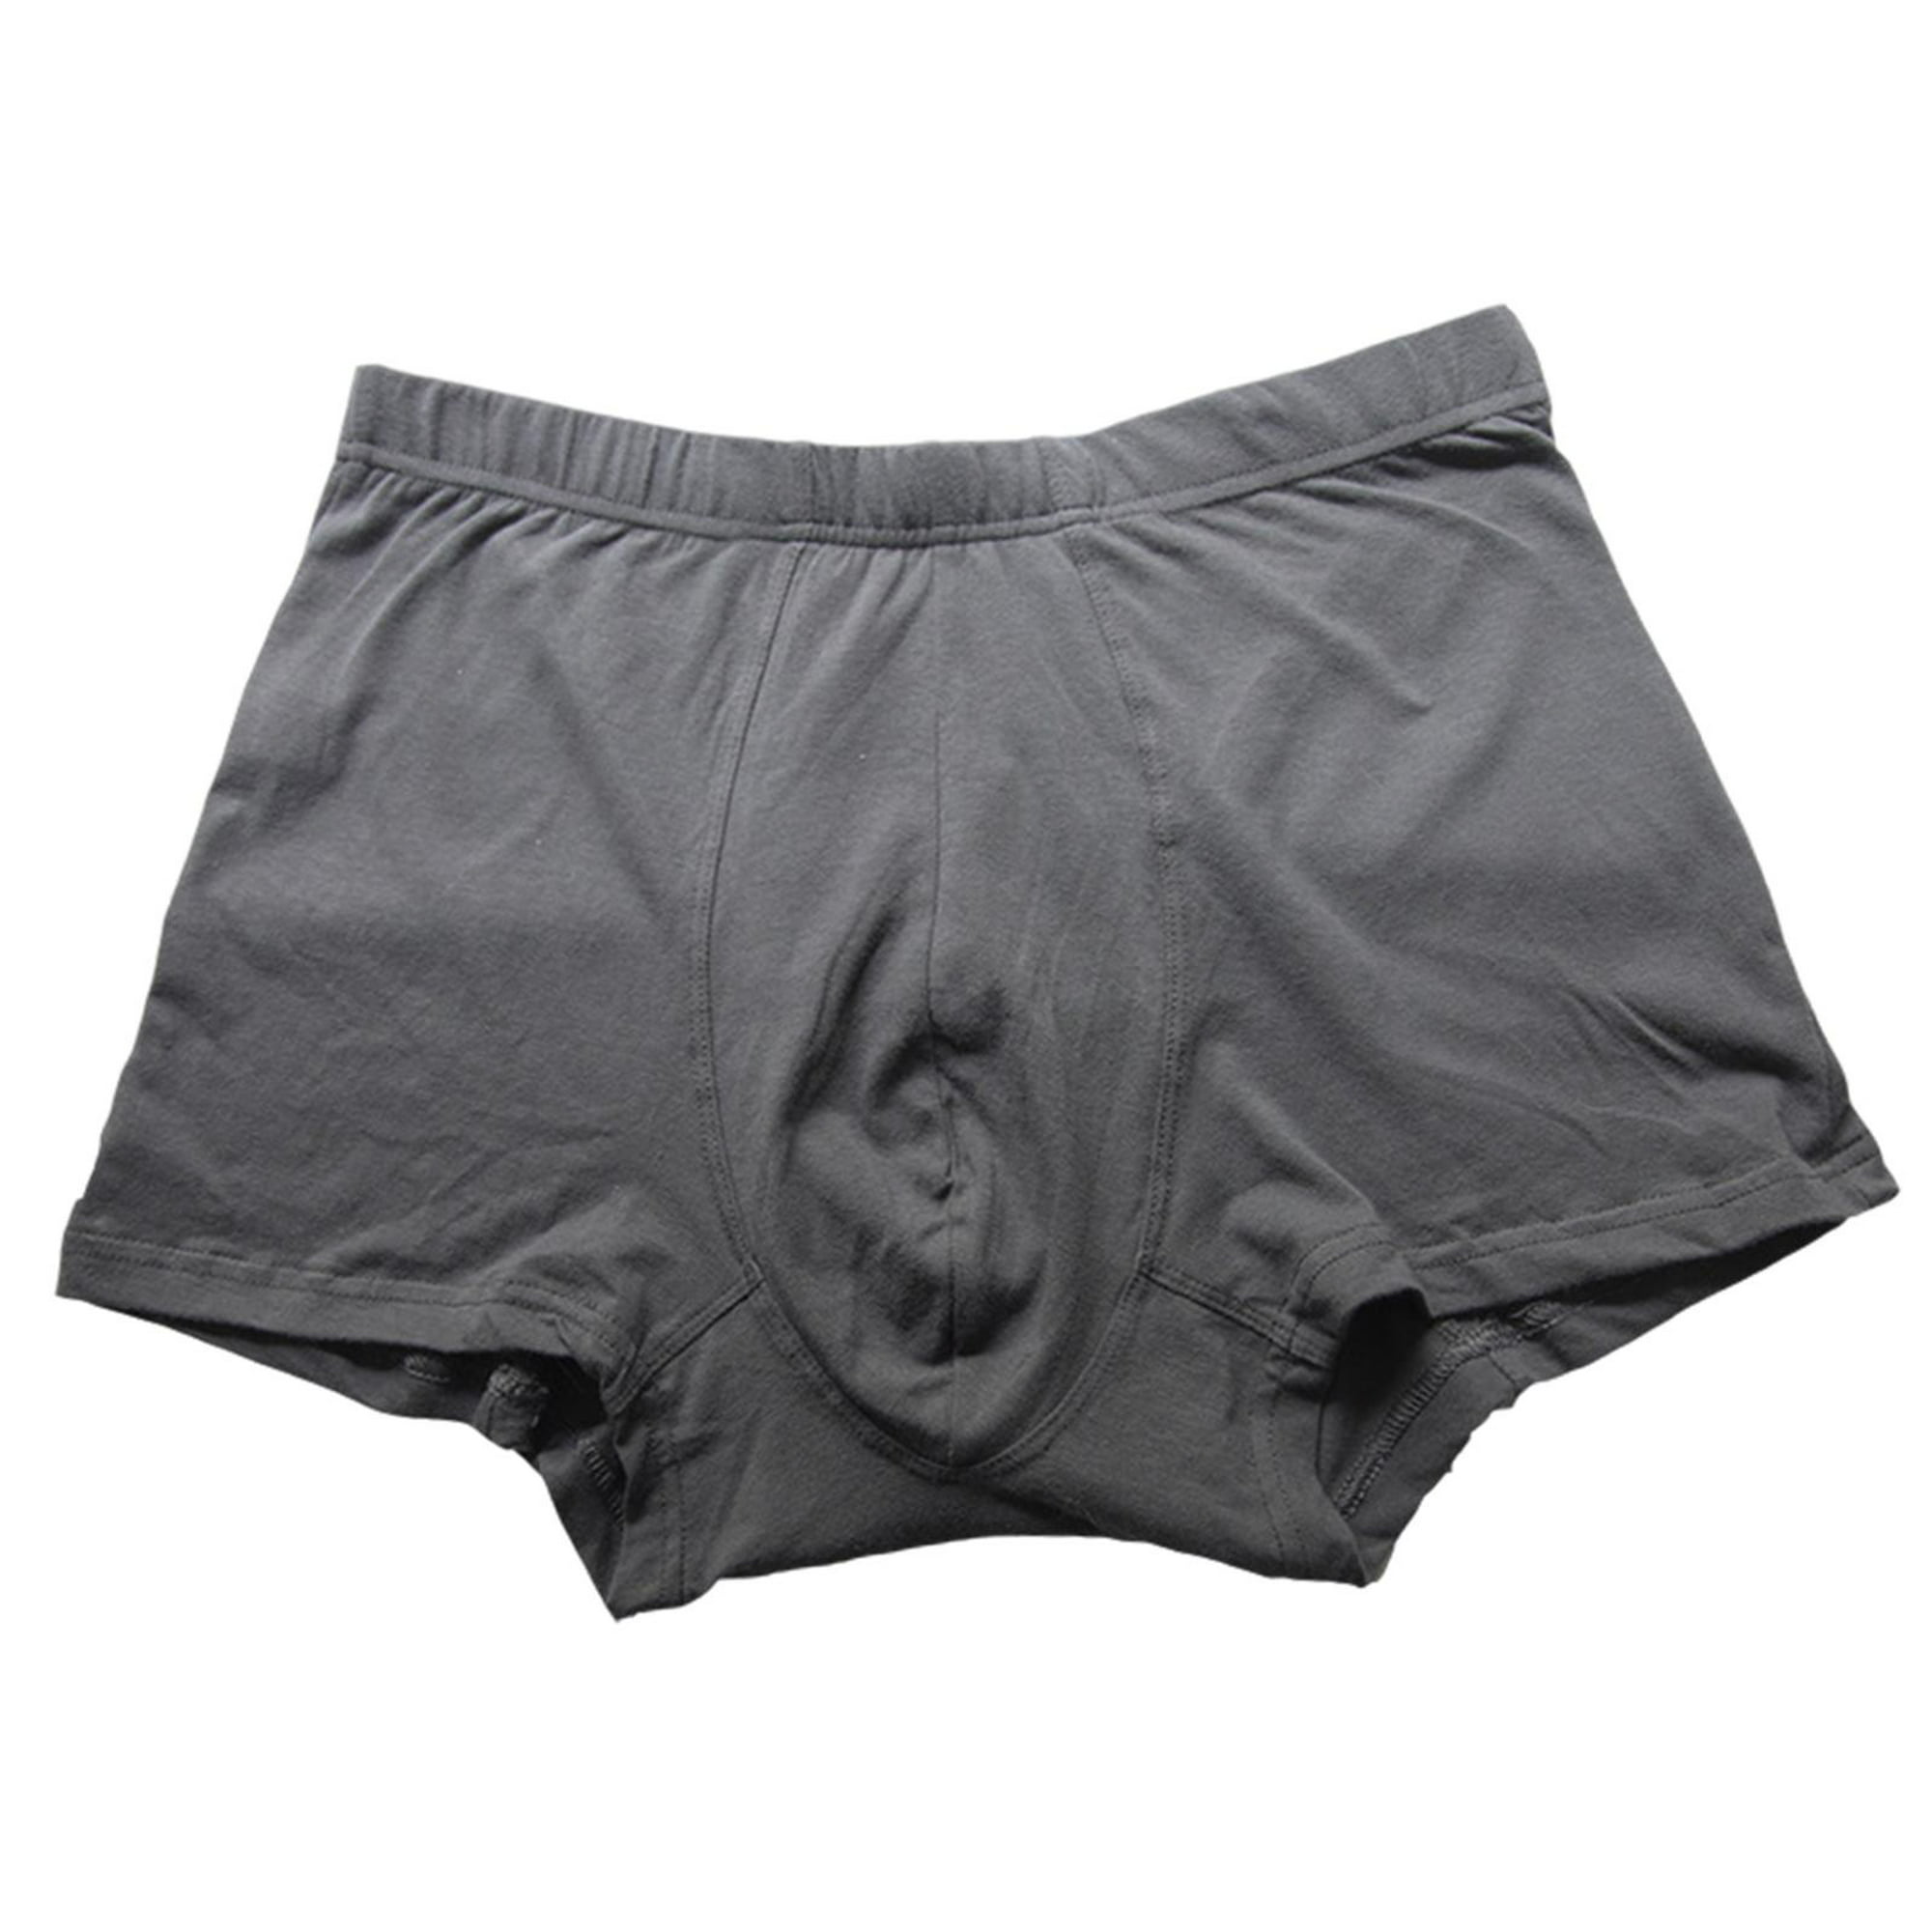 Pañales para Ancianos Ropa Interior Reutilizable Lavable para Hombres Mujeres  Adultos Ancianos gris oscuro L Zulema Pantalones de pañales para ancianos